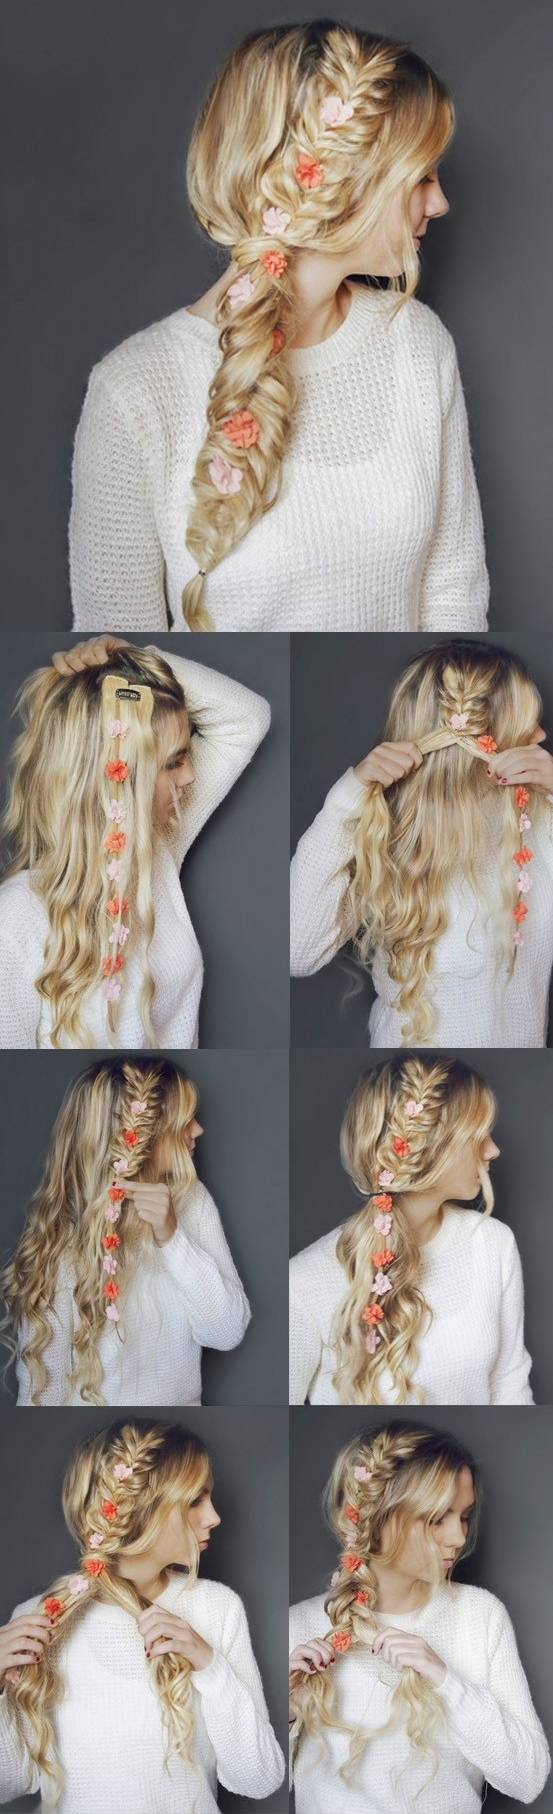 JamAdvice_com_ua_hairstyles-with-braids-for-long-hair-5